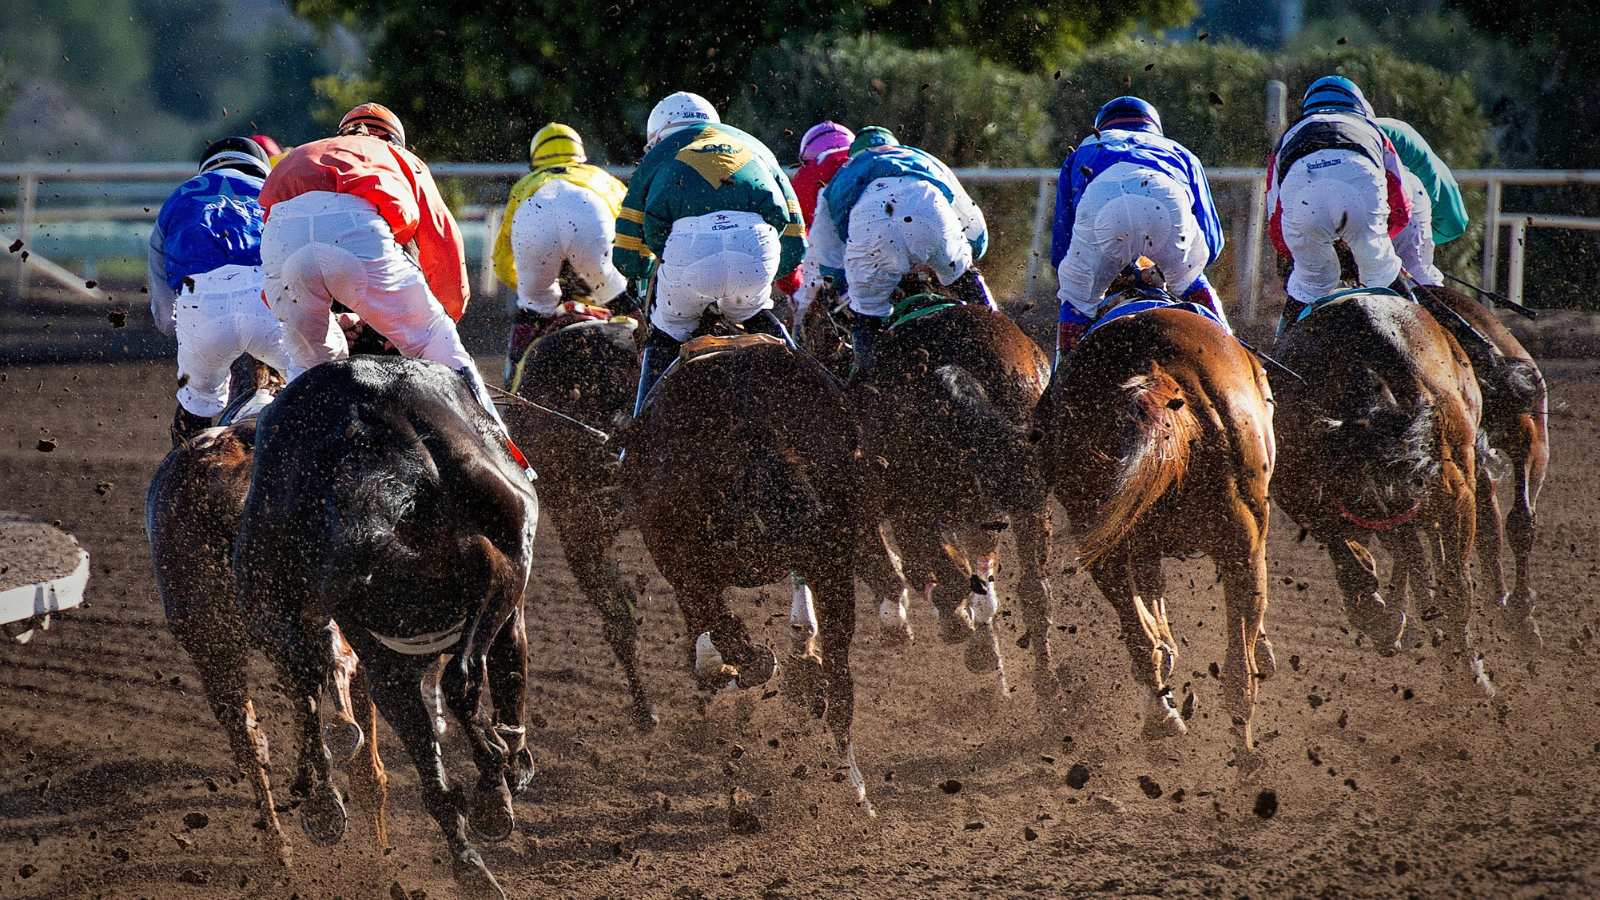 Horseracing event on mud track